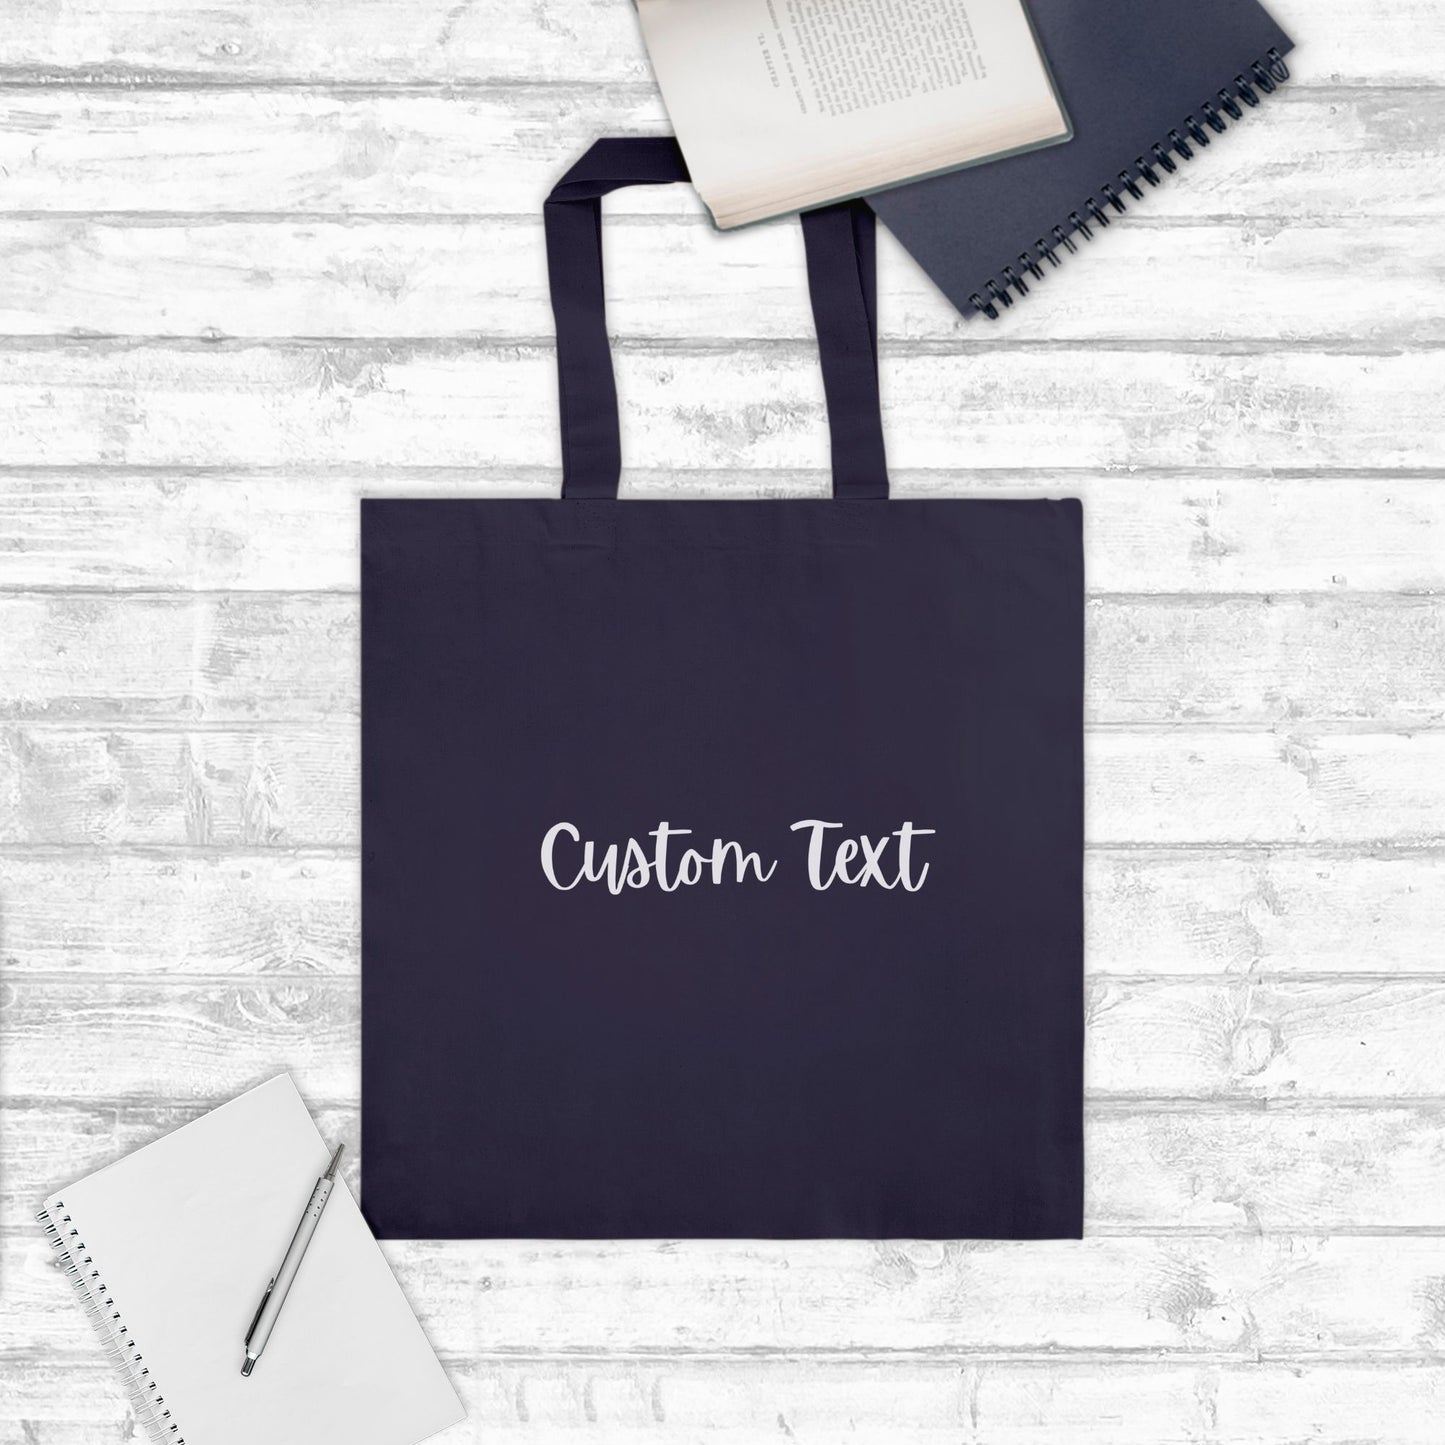 Custom Text - Tote Bag Lightweight